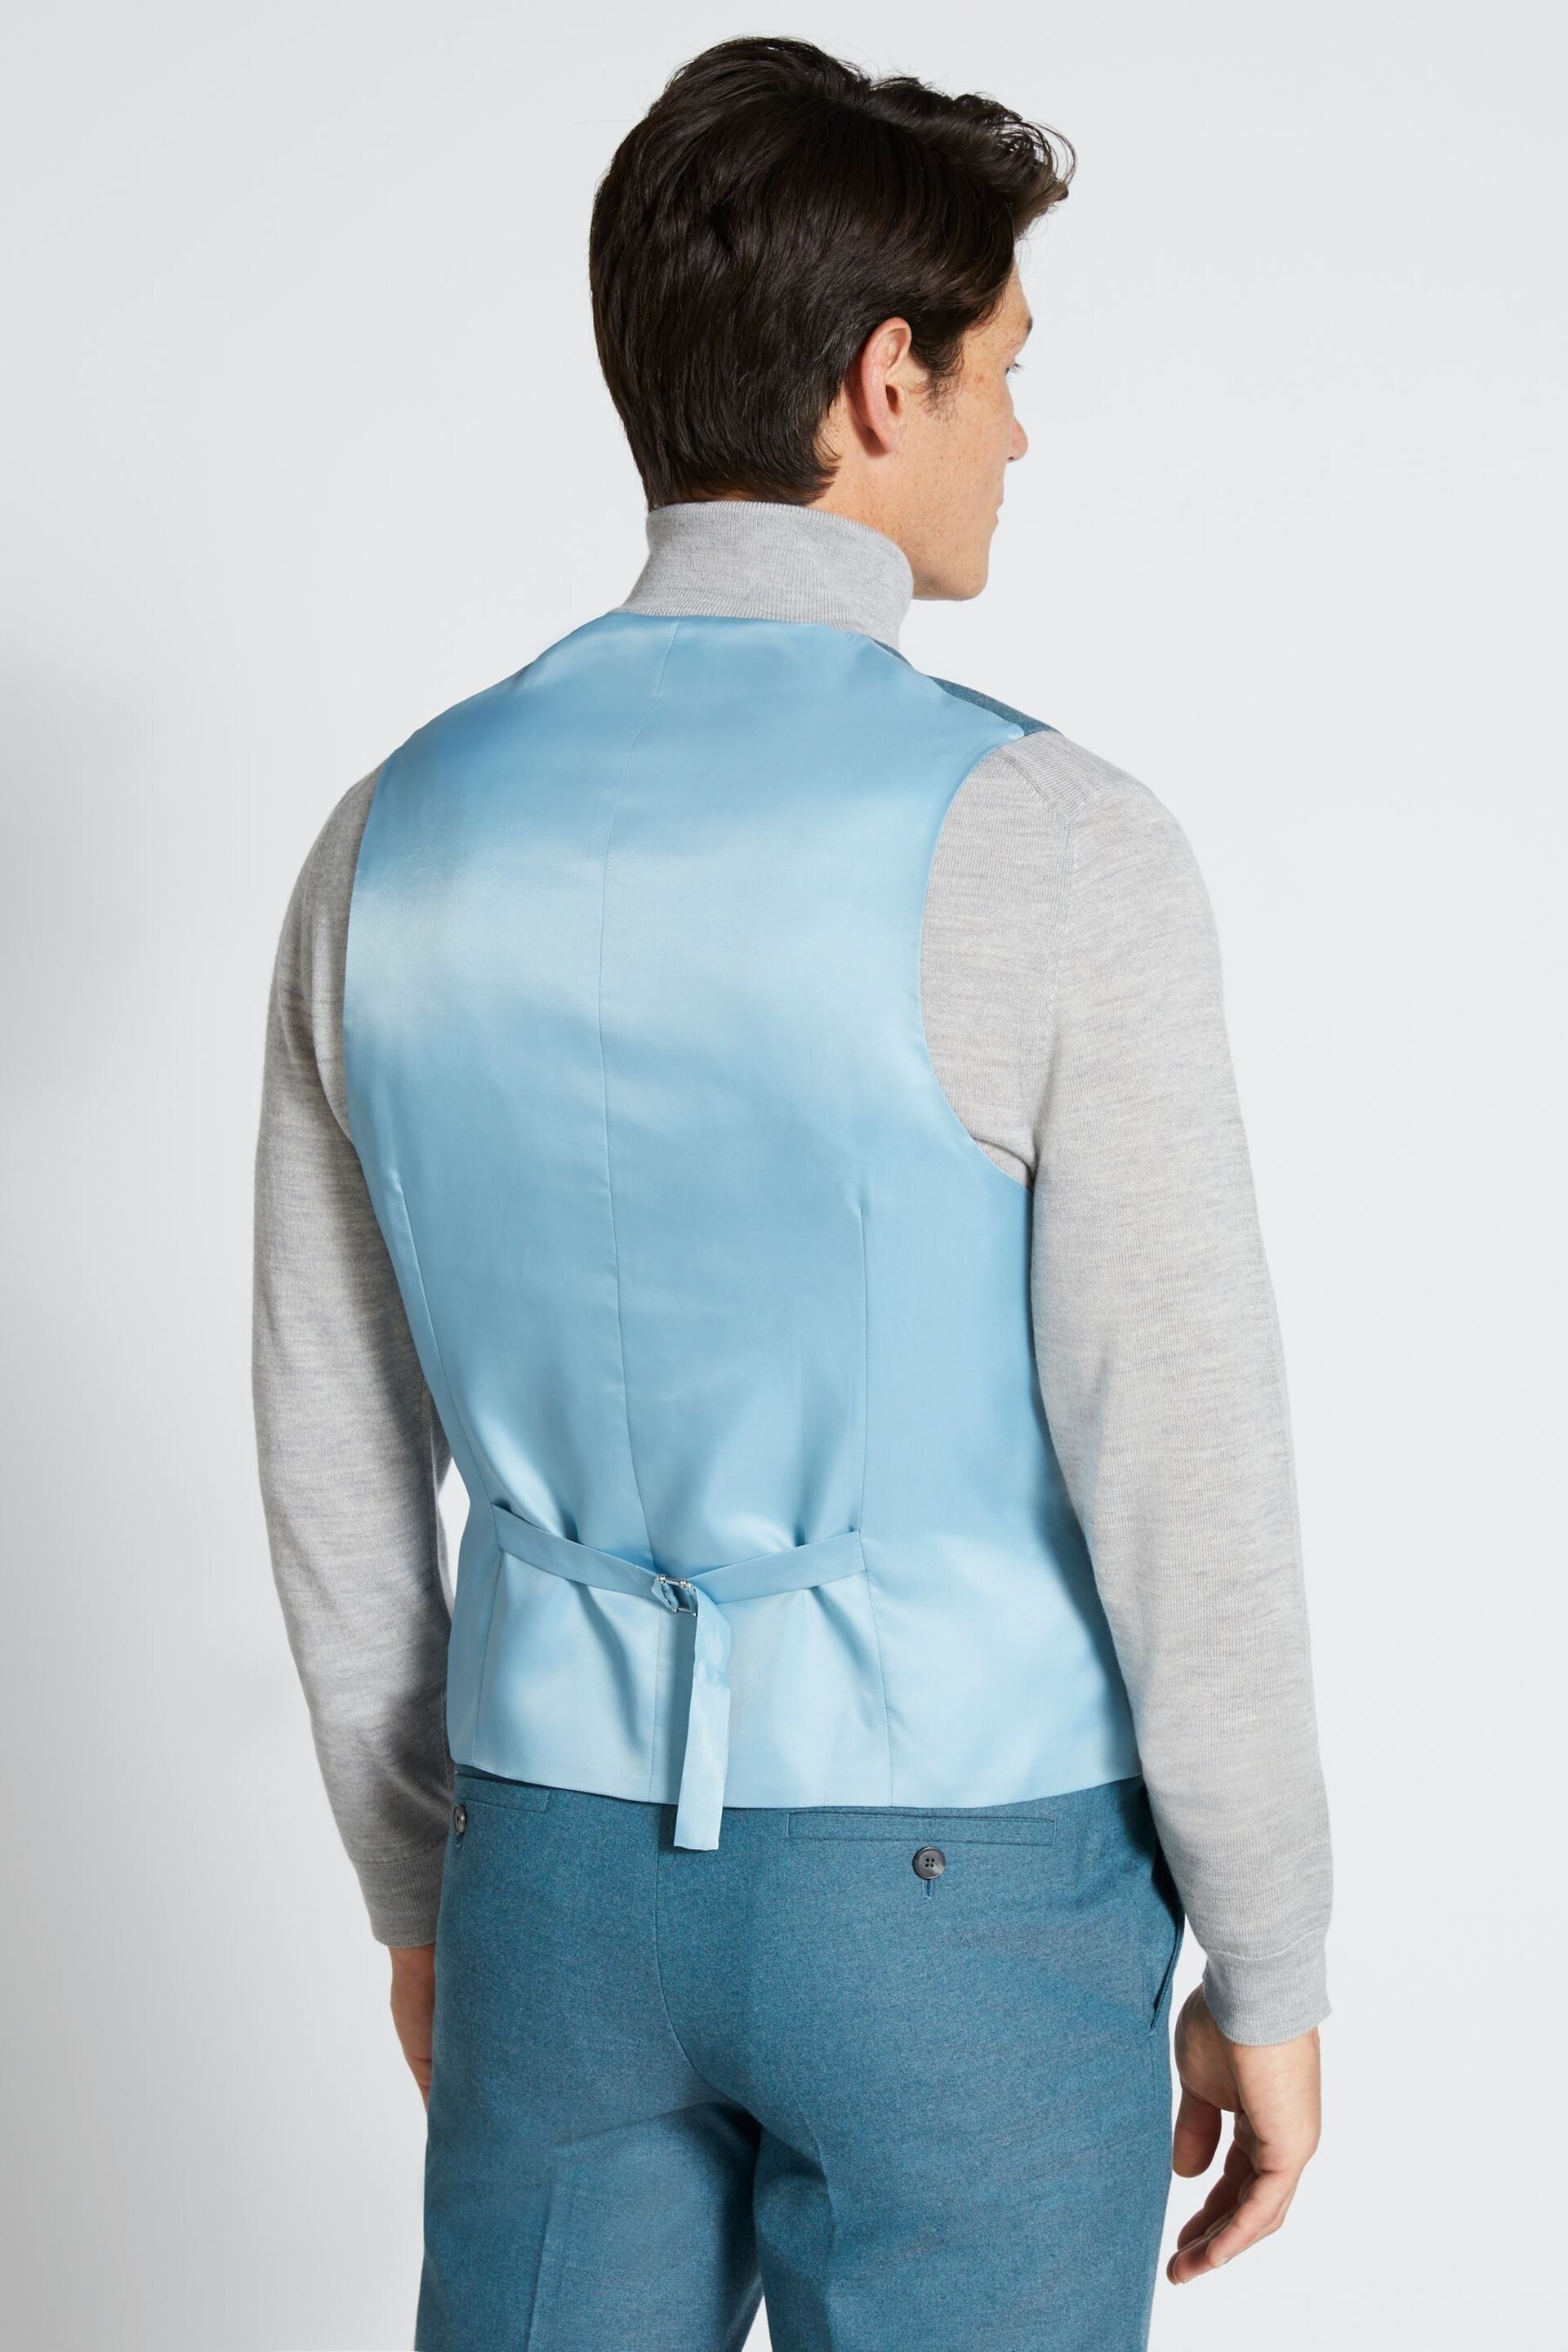 MOSS Blue Flannel Suit: Waistcoat - Image 2 of 3